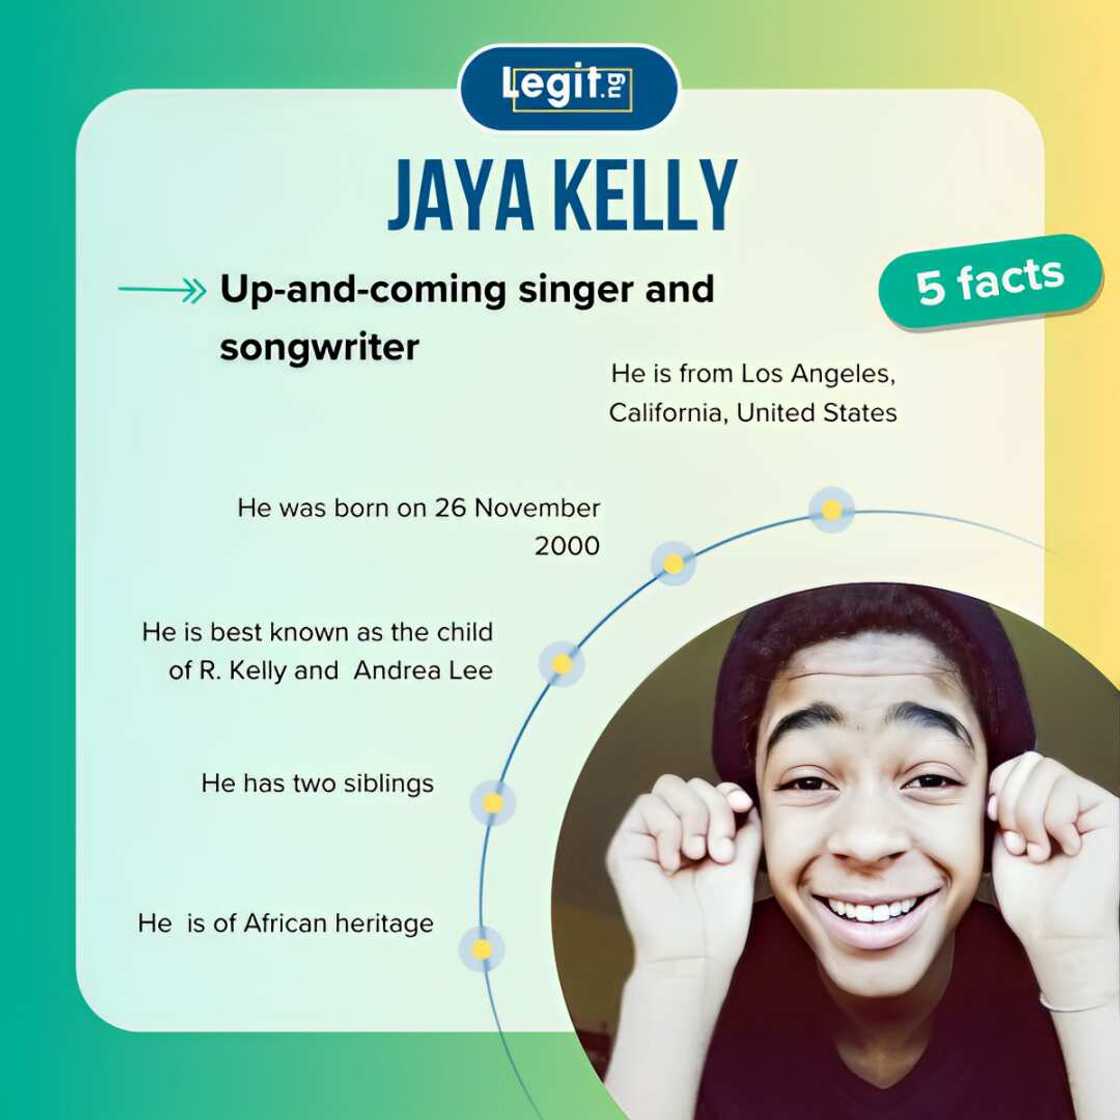 Facts about Jaya Kelly.